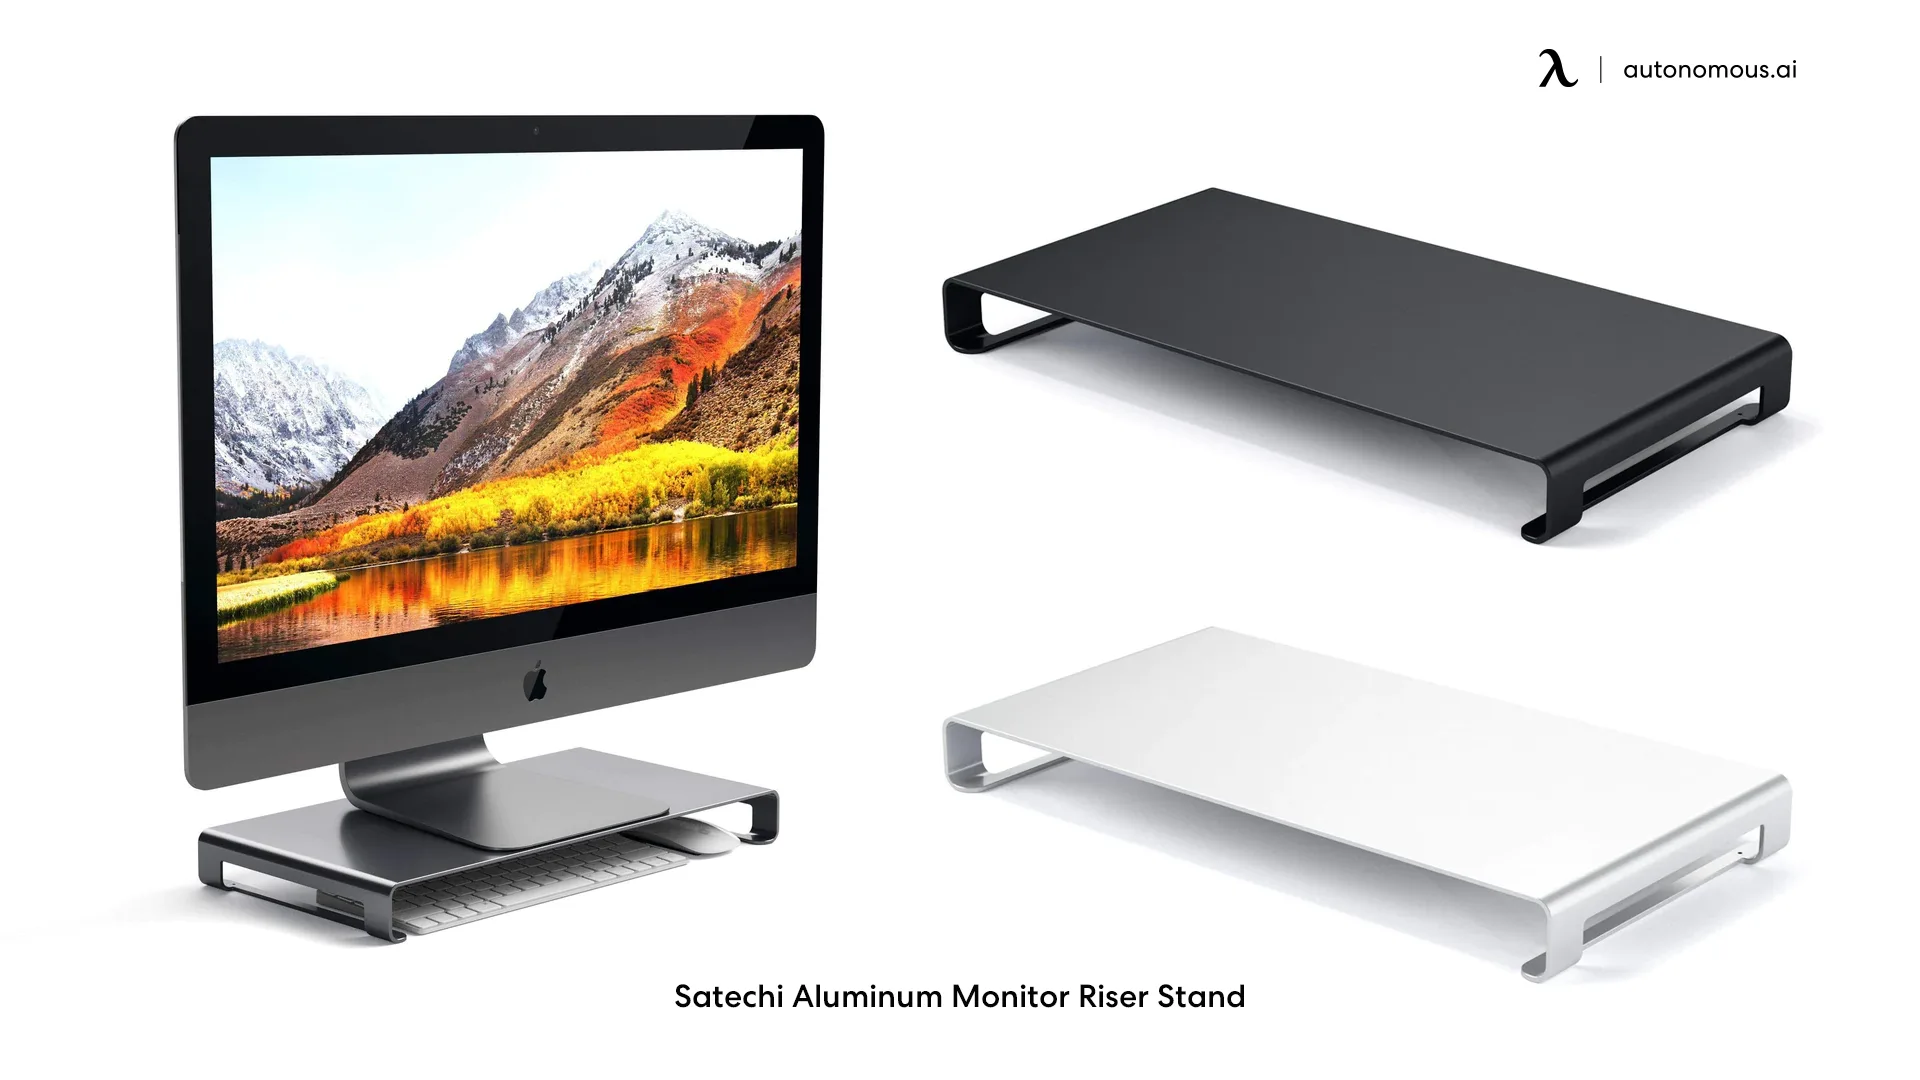 Satechi Aluminum Monitor Riser Stand